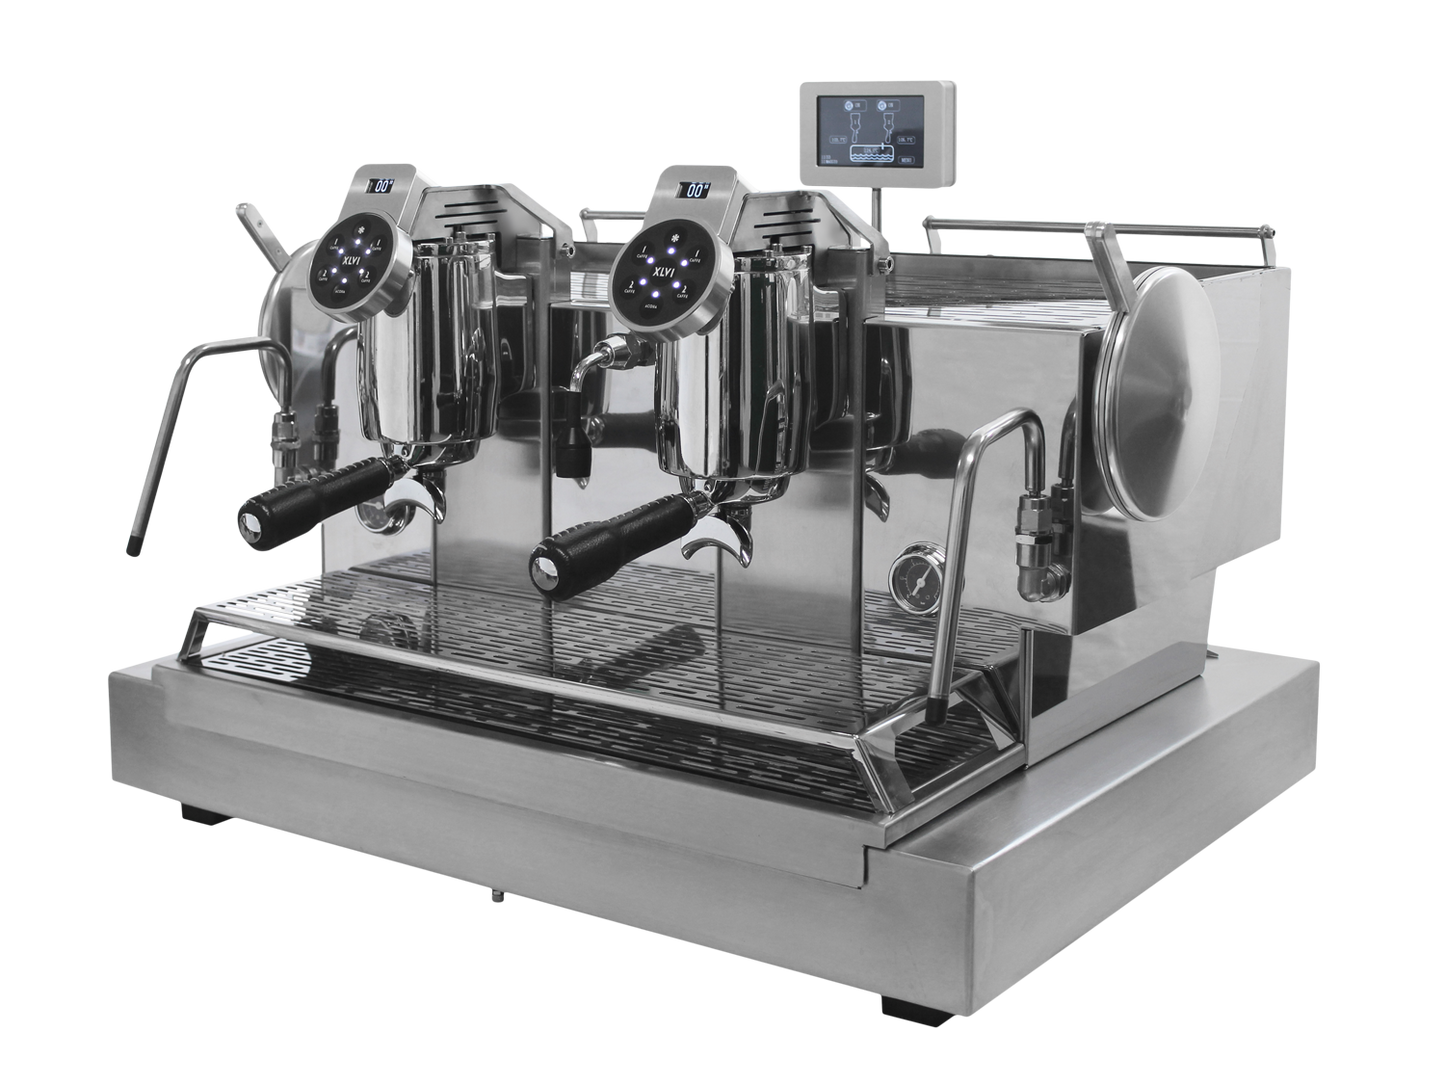 XLVI STH9 Espresso Machine a real robust Multi-boiler